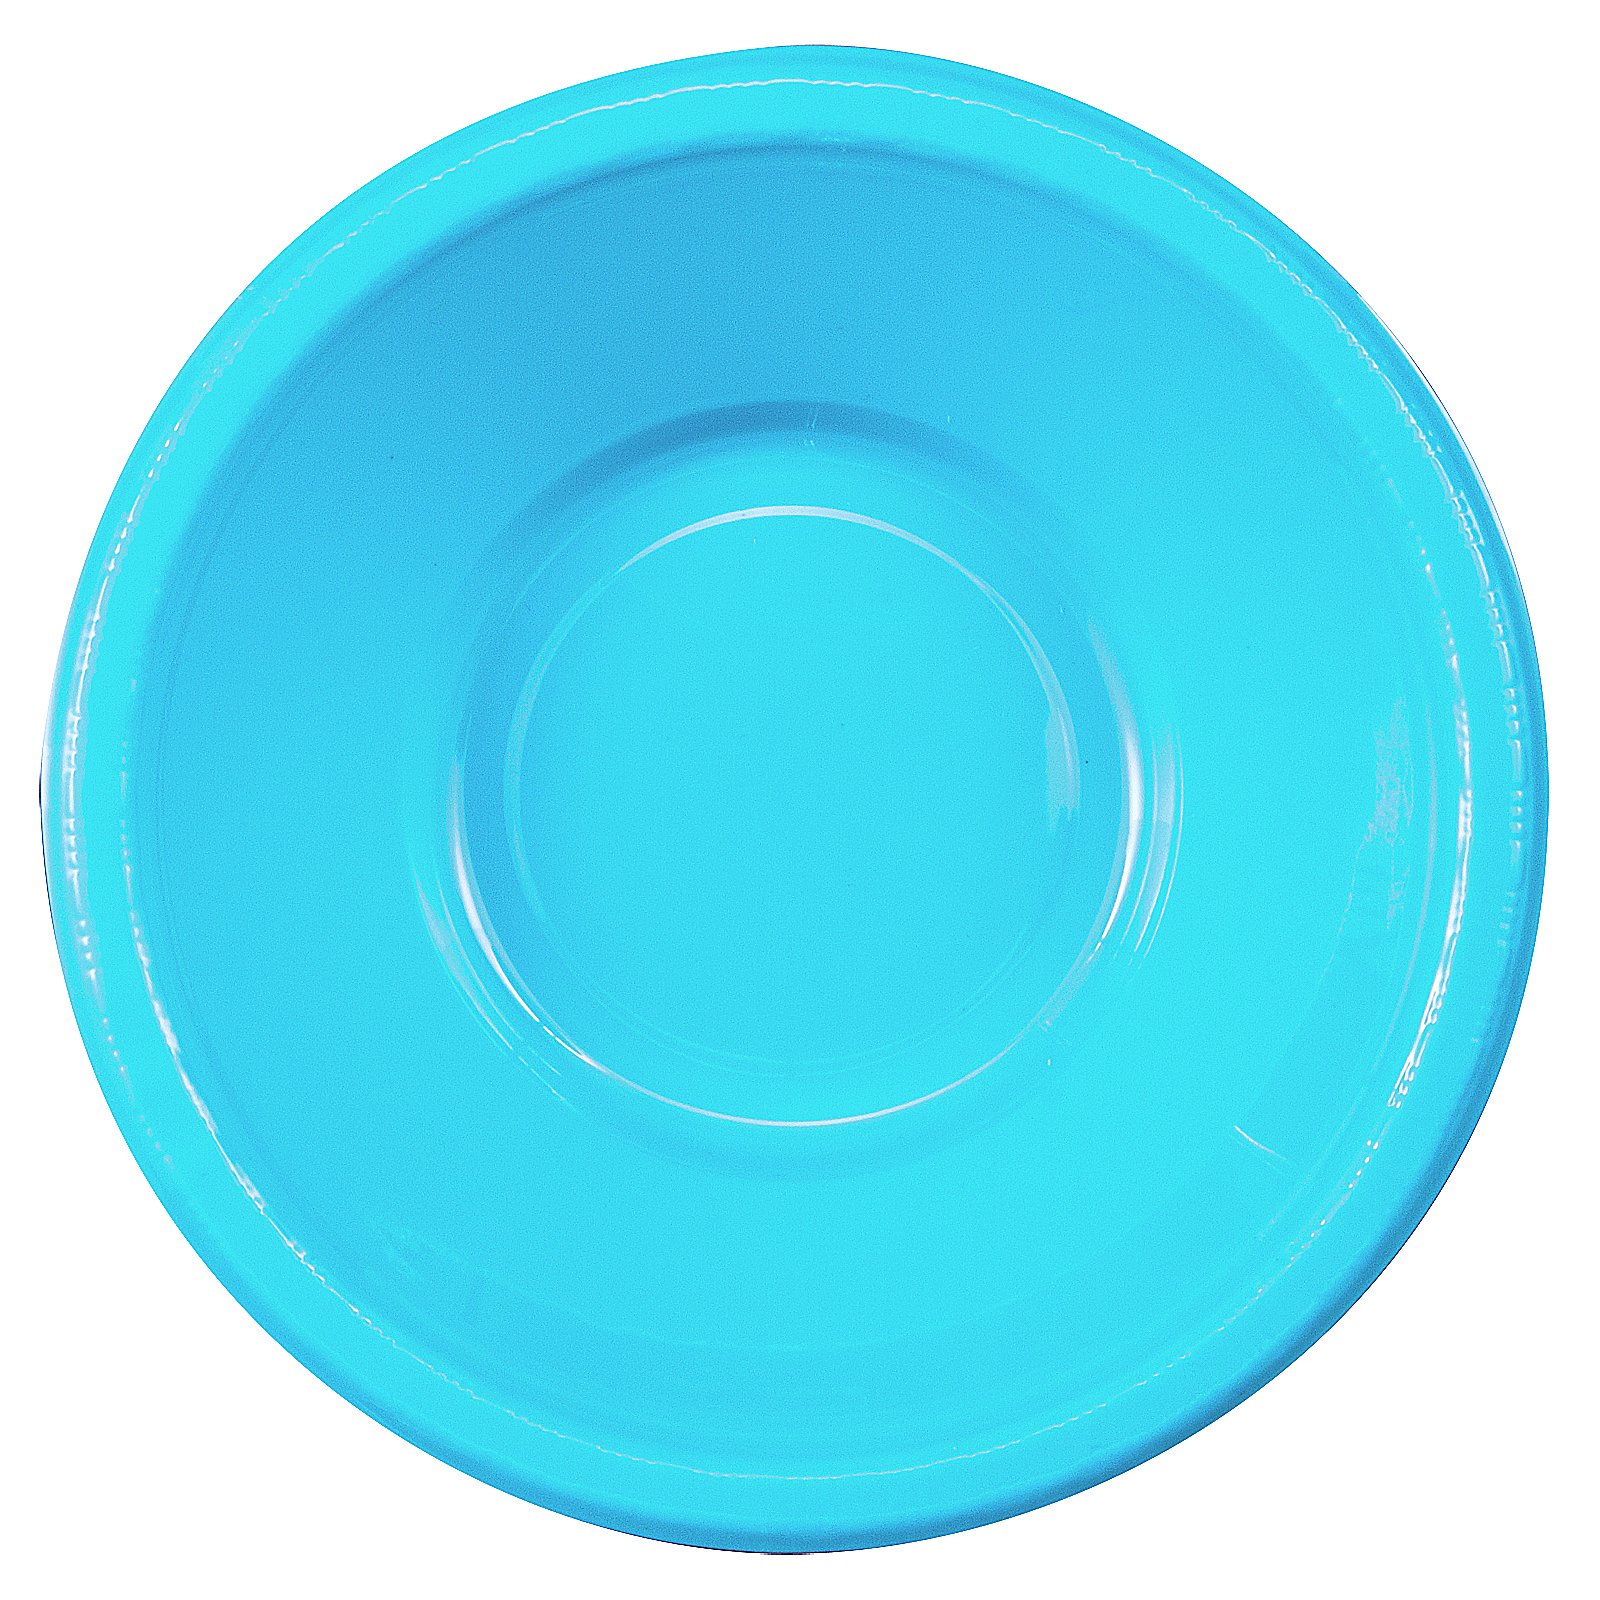 Bermuda Blue (Turquoise) Plastic Bowls (20 count)